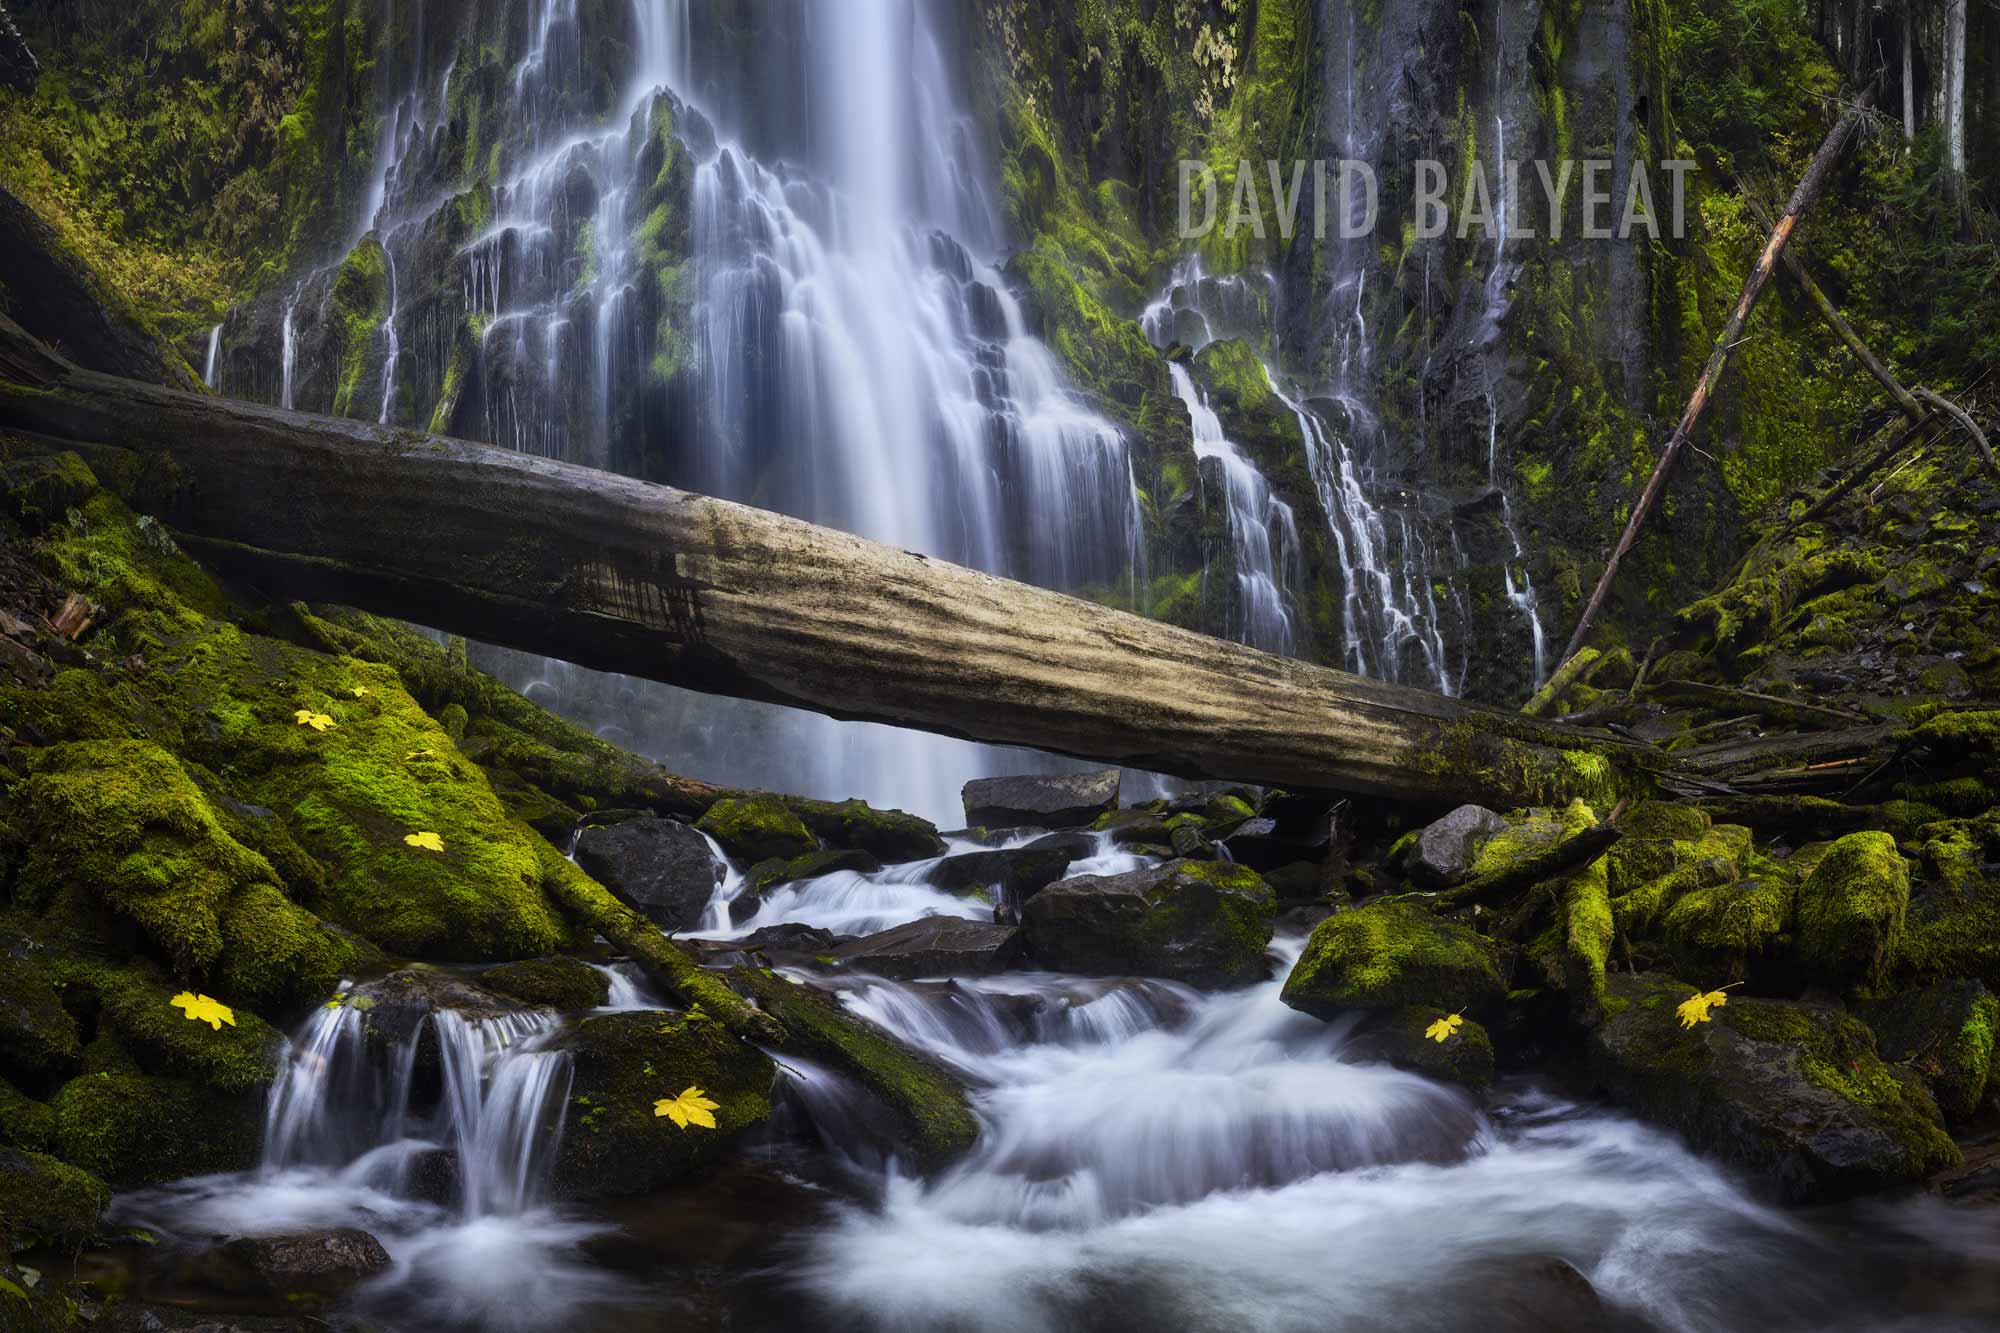 Proxy Falls Oregon Waterfall